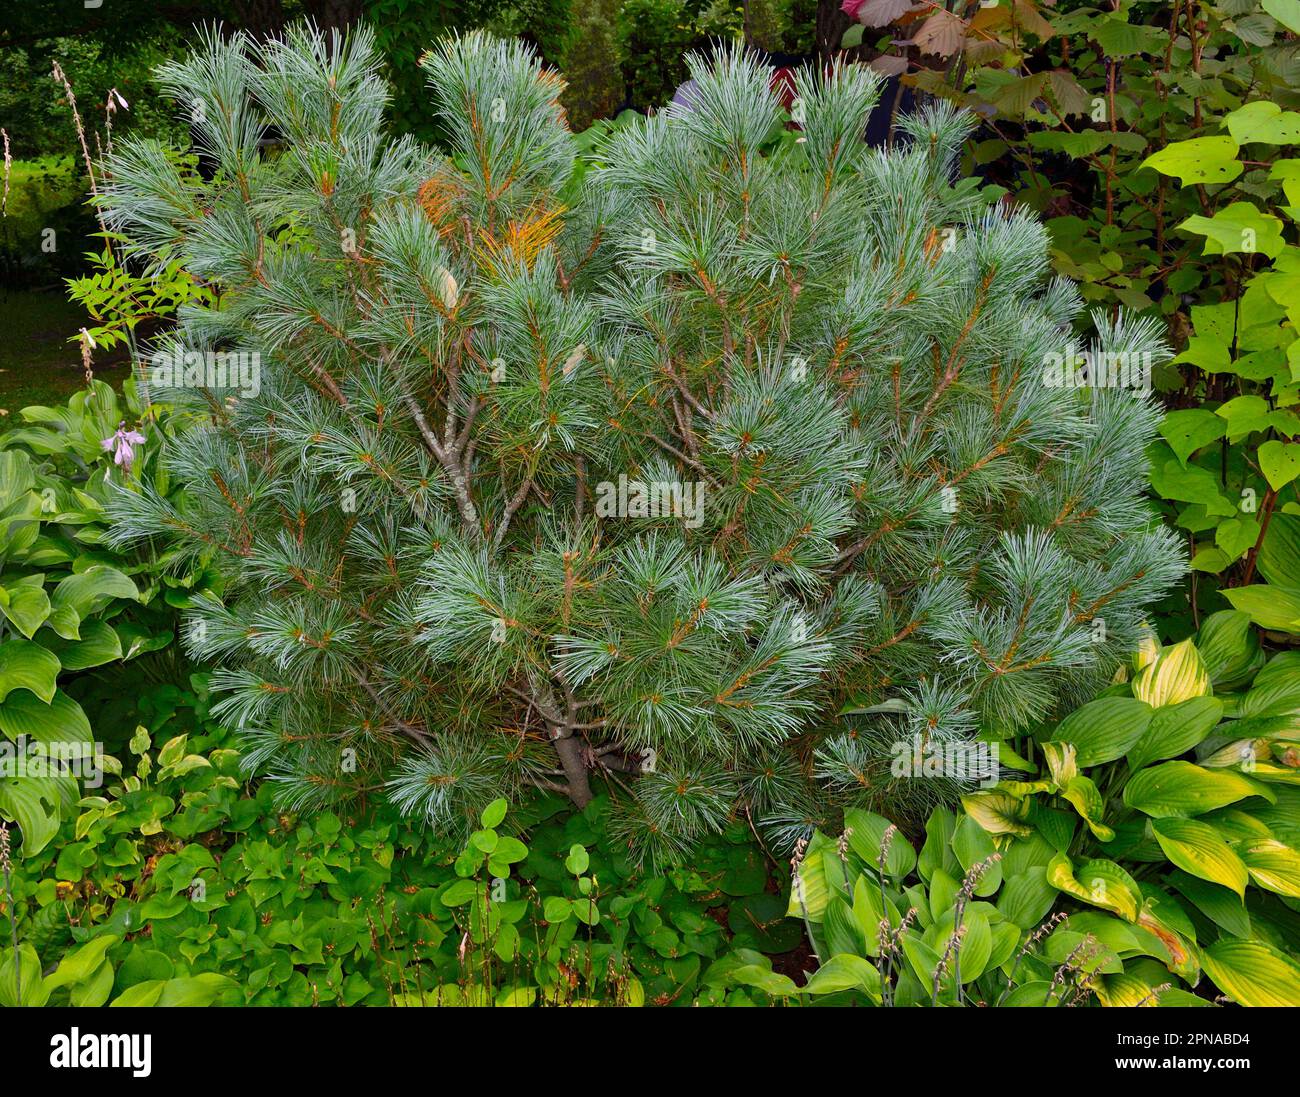 Dwarf pine tree or Pinus pumila in garden - decorative creeping coniferous plant for garden landscape design.Ornamental evergreen dwarf conifer for pa Stock Photo